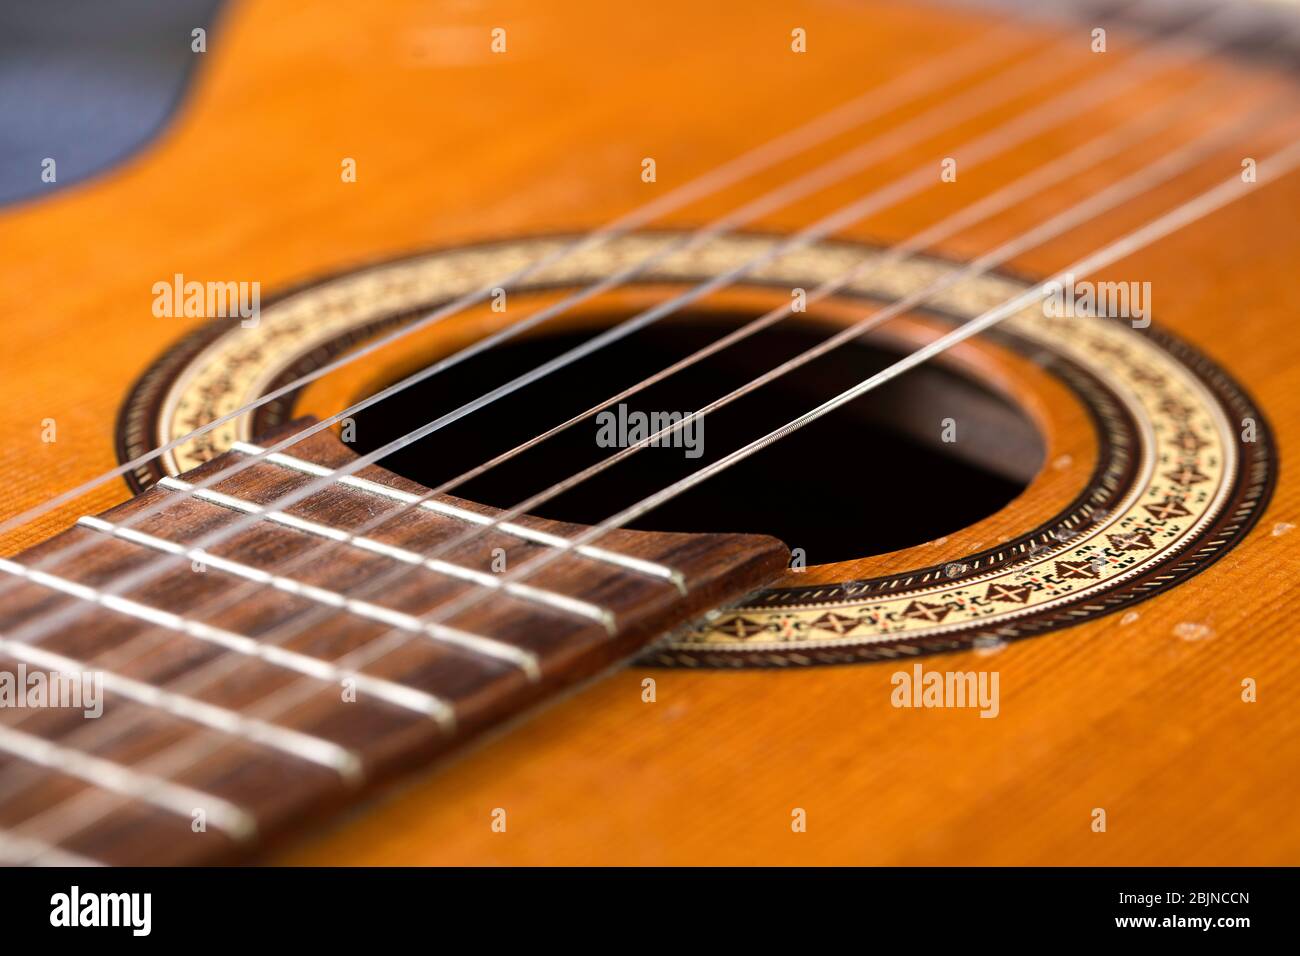 Guitar - soundbox or resonator and strings. Stock Photo